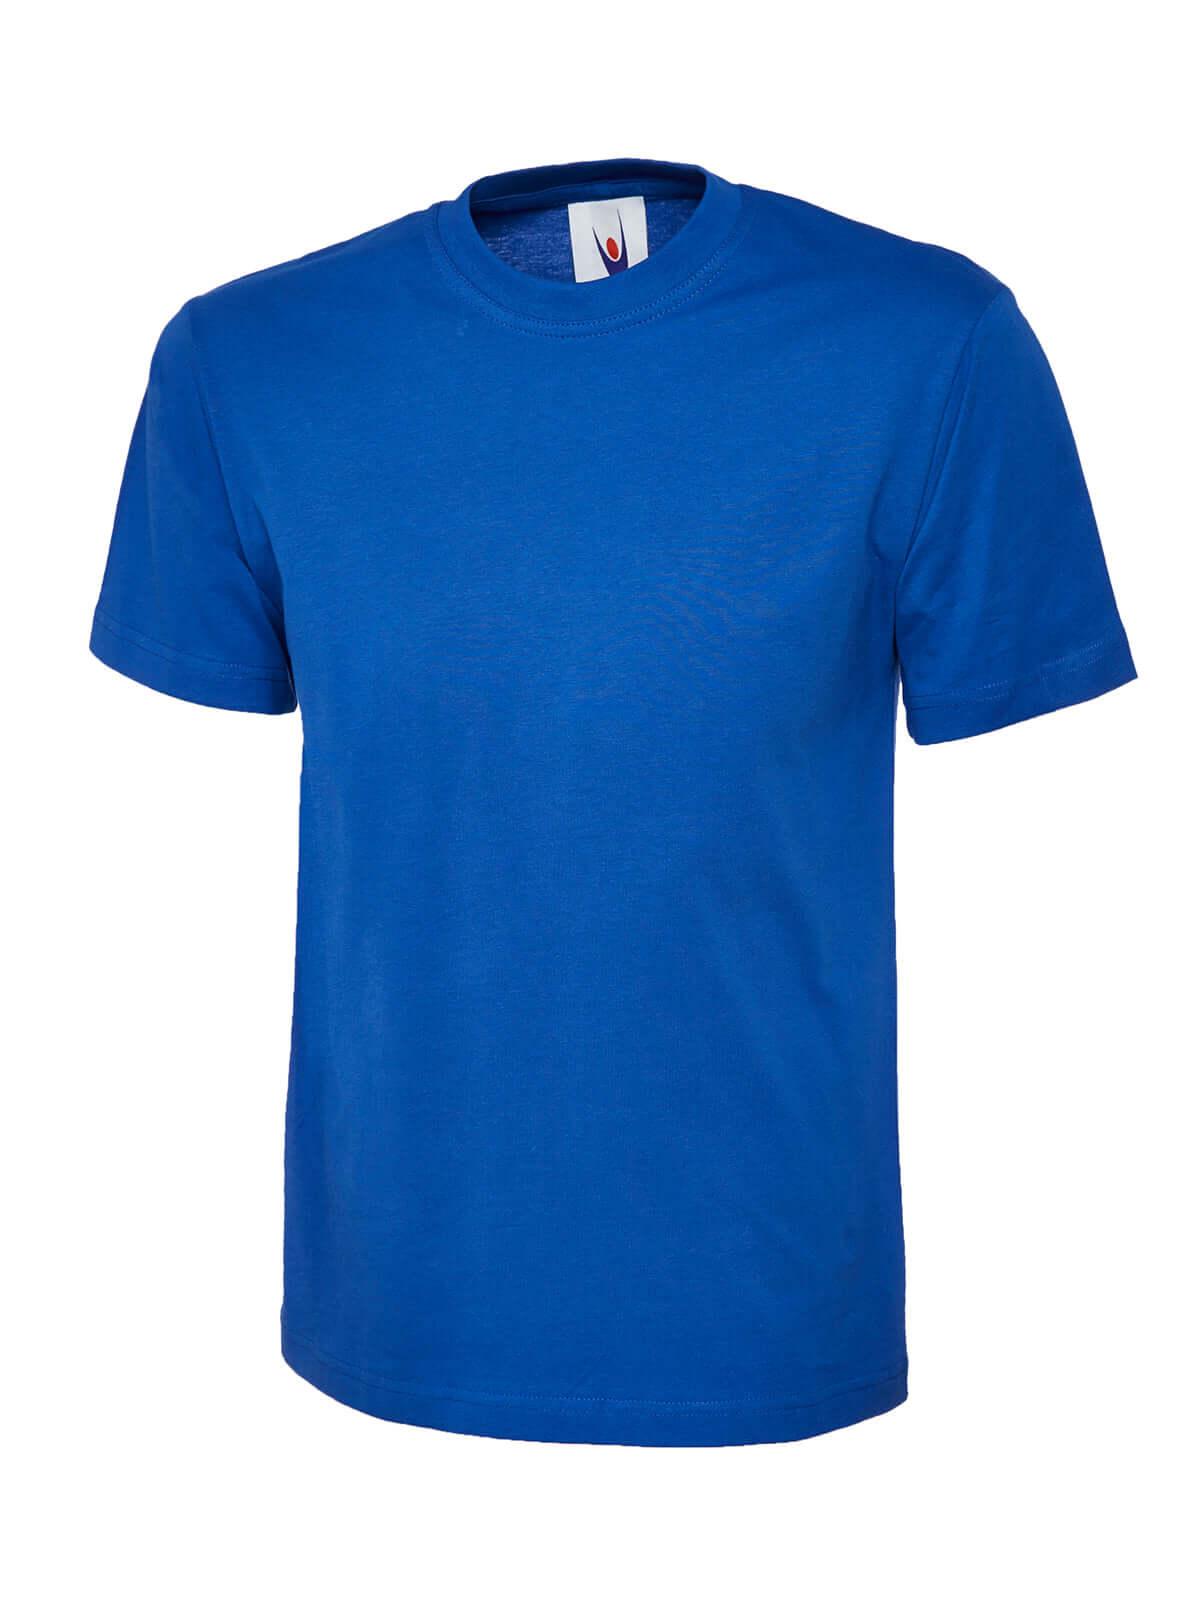 Pegasus Uniform Premium T-shirt - Royal Blue